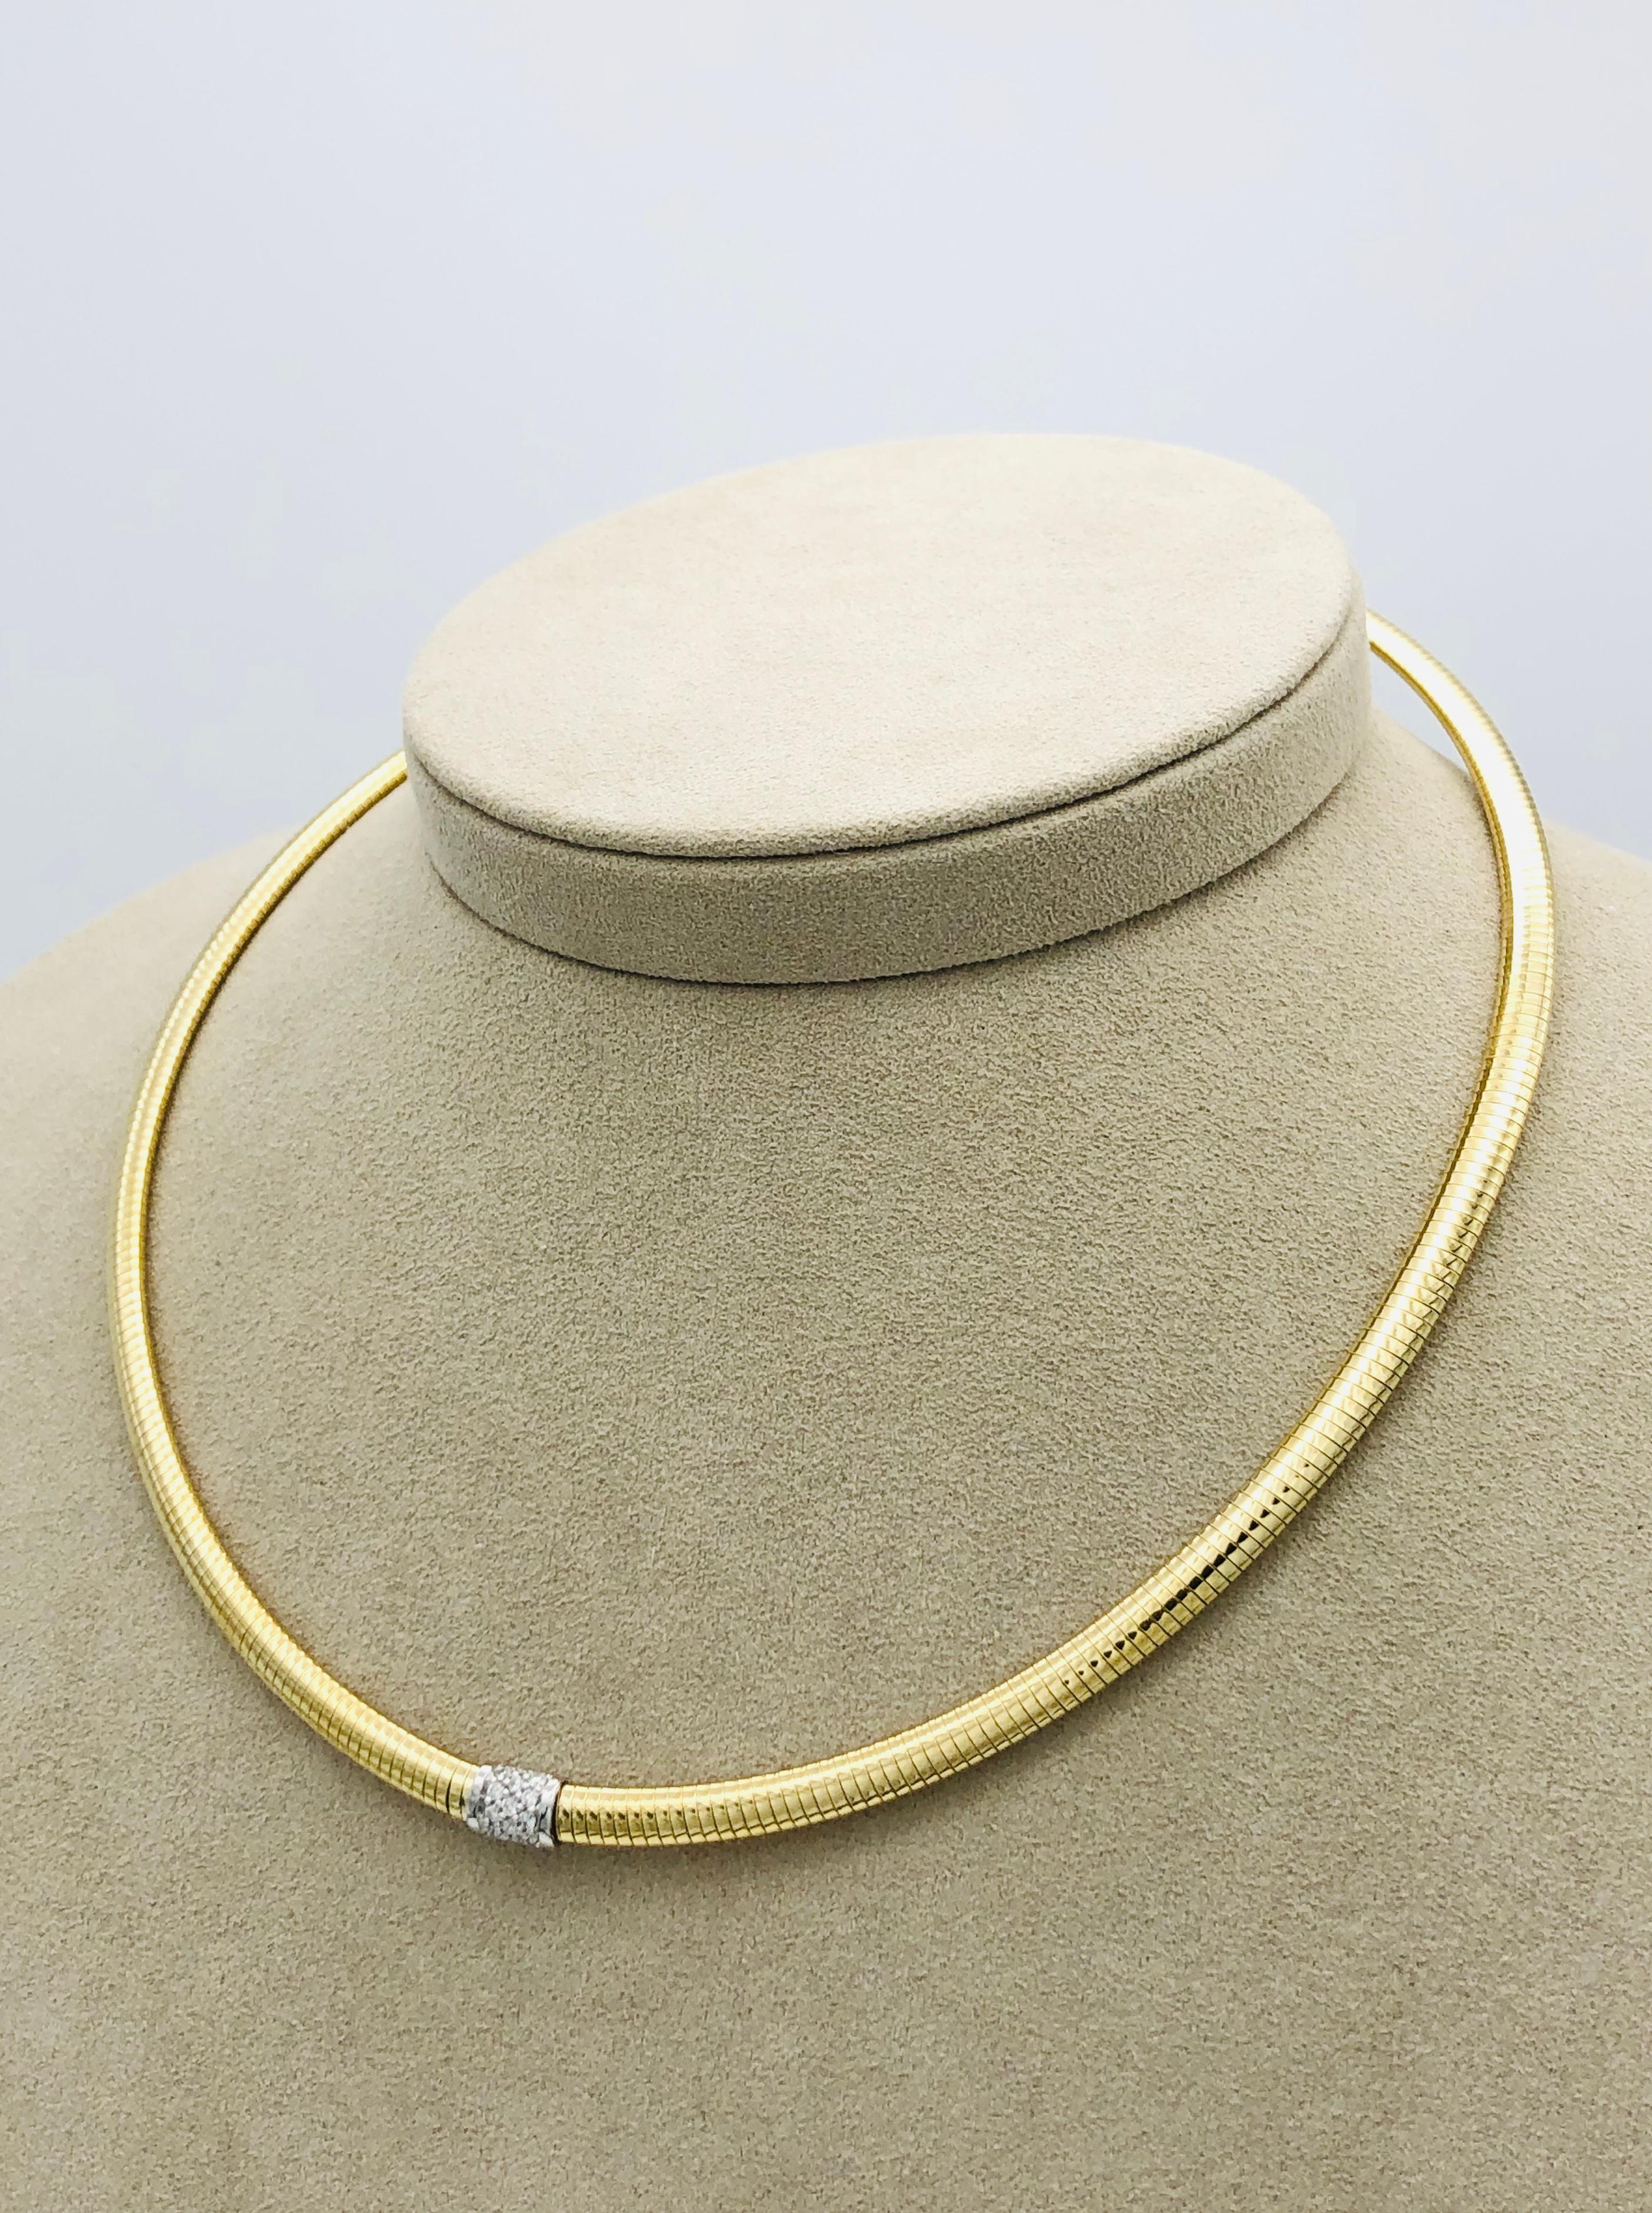 Contemporary Yellow Gold 18 Karat Choker Necklace and Diamonds Brilliant Cut